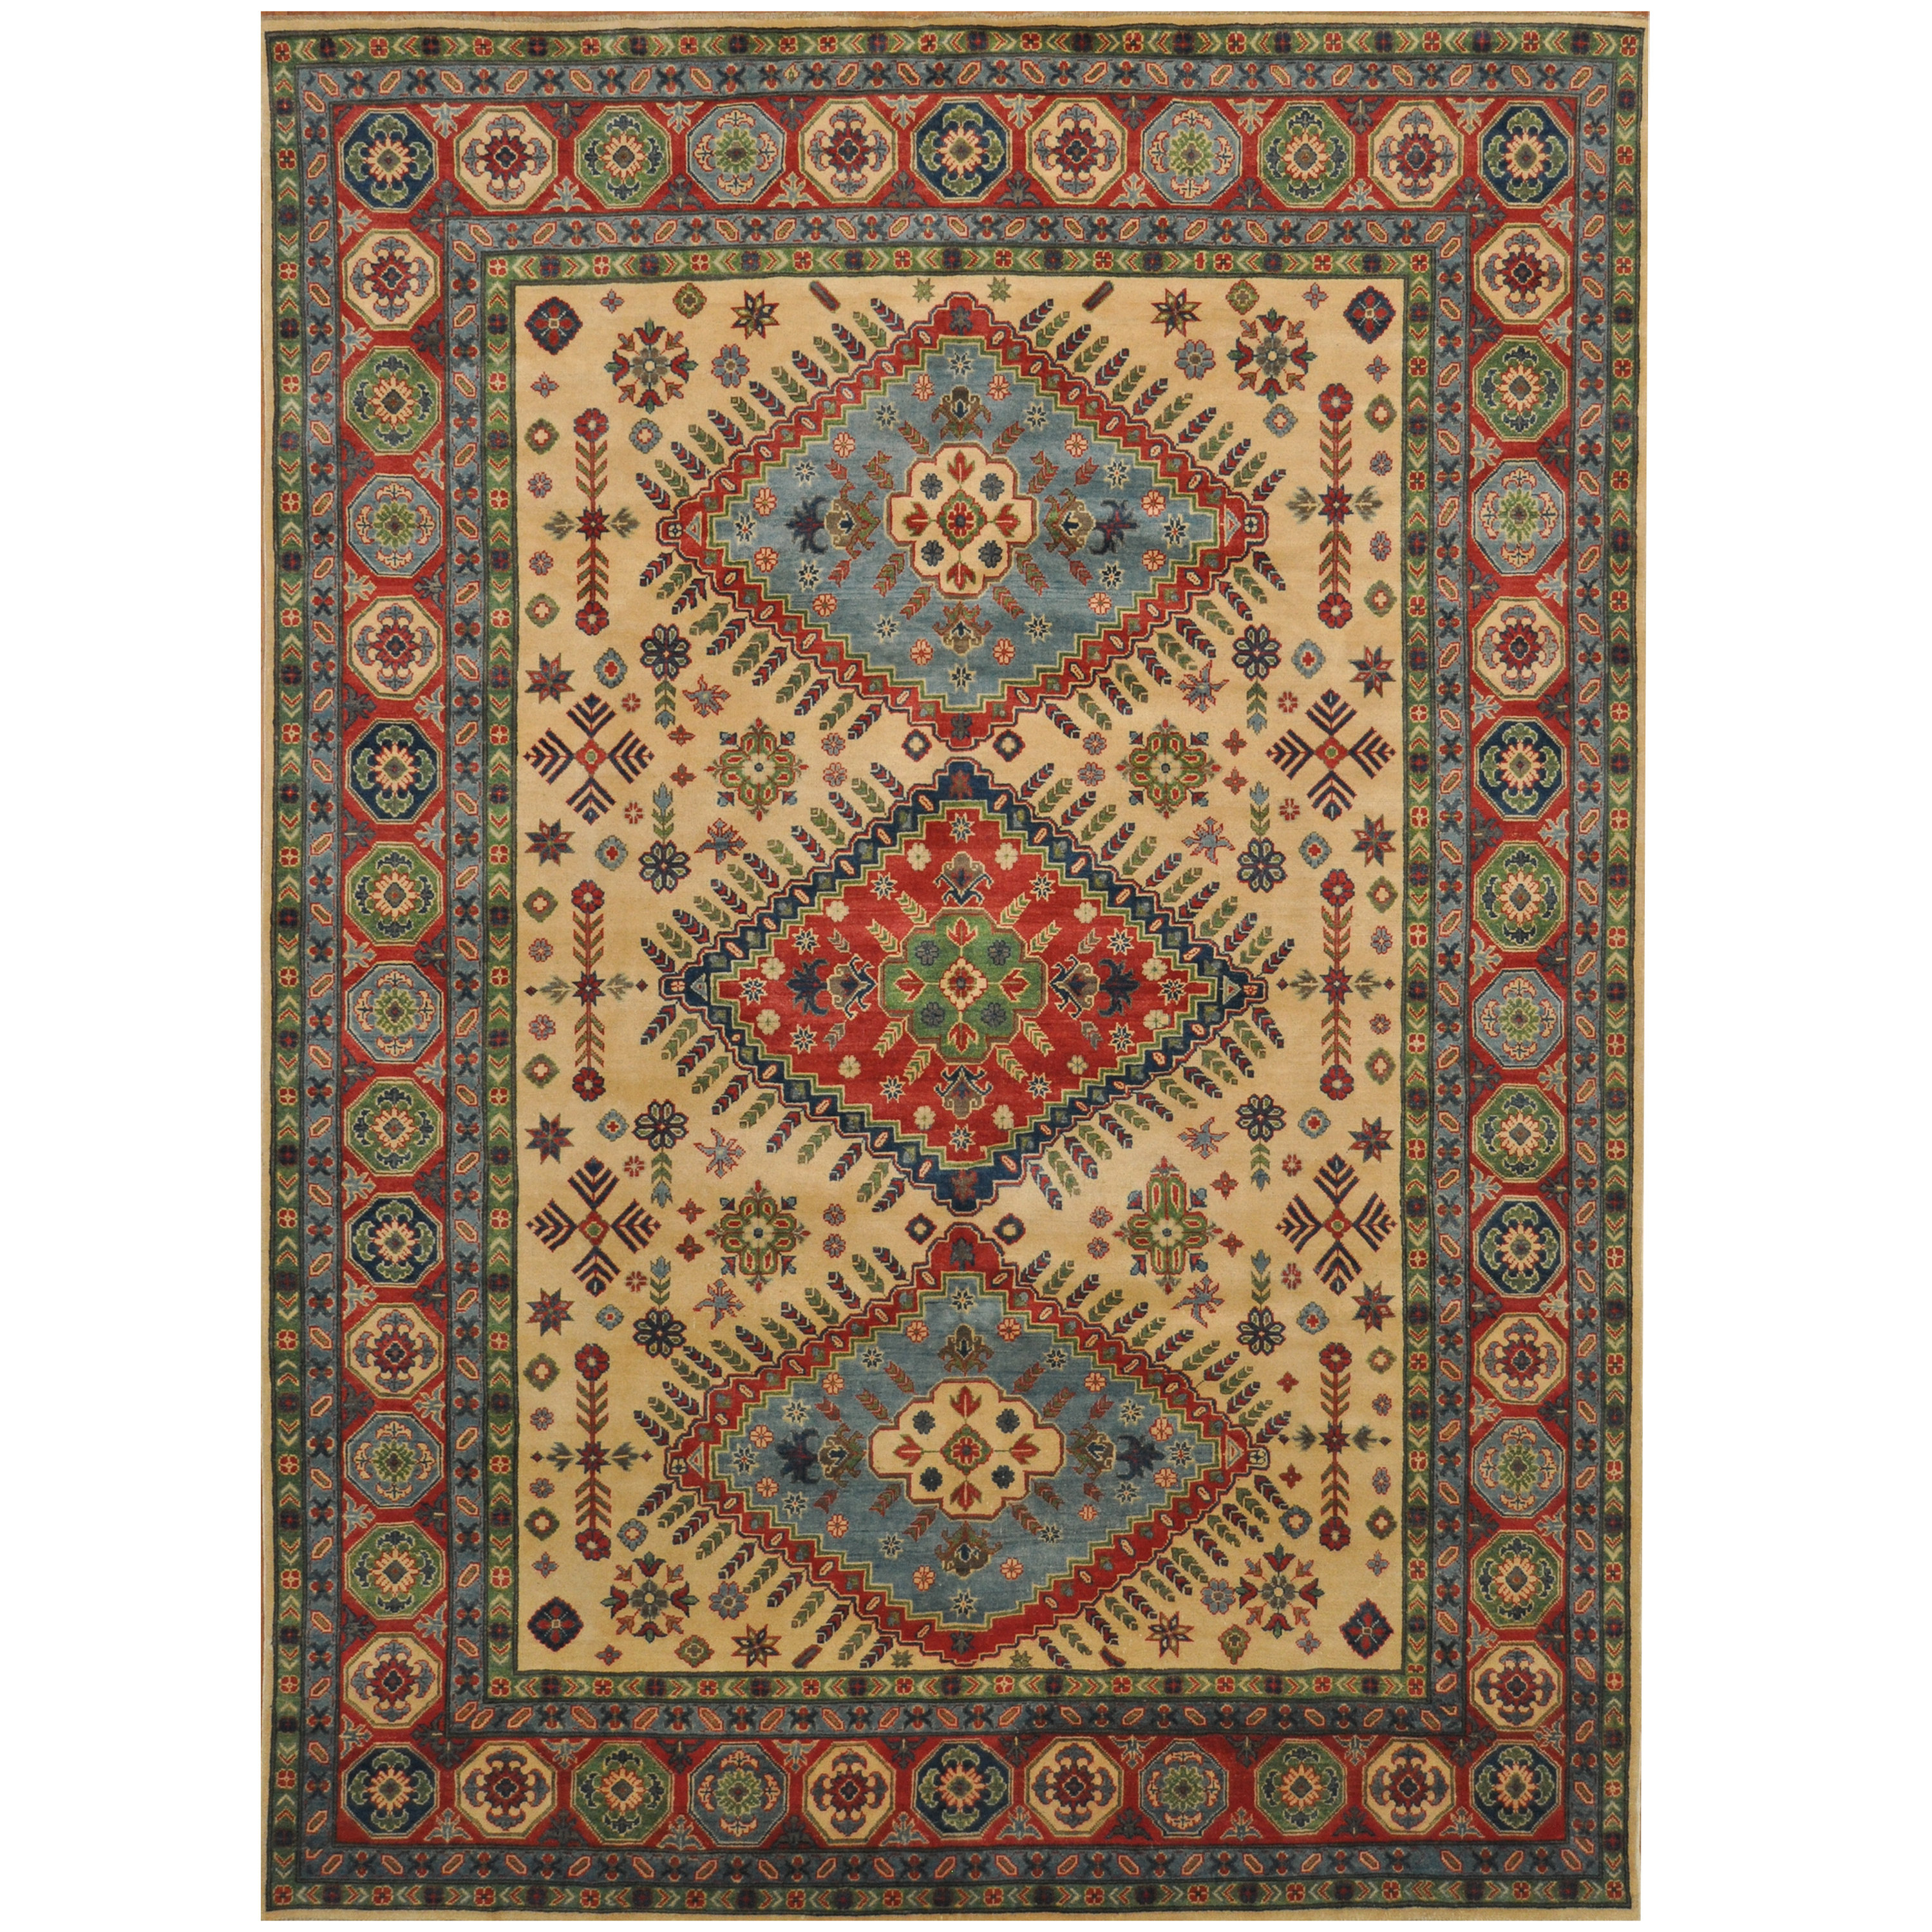 Afghan Rug, 2x7 rug, home gifts for her, bohemian rug, rug pad